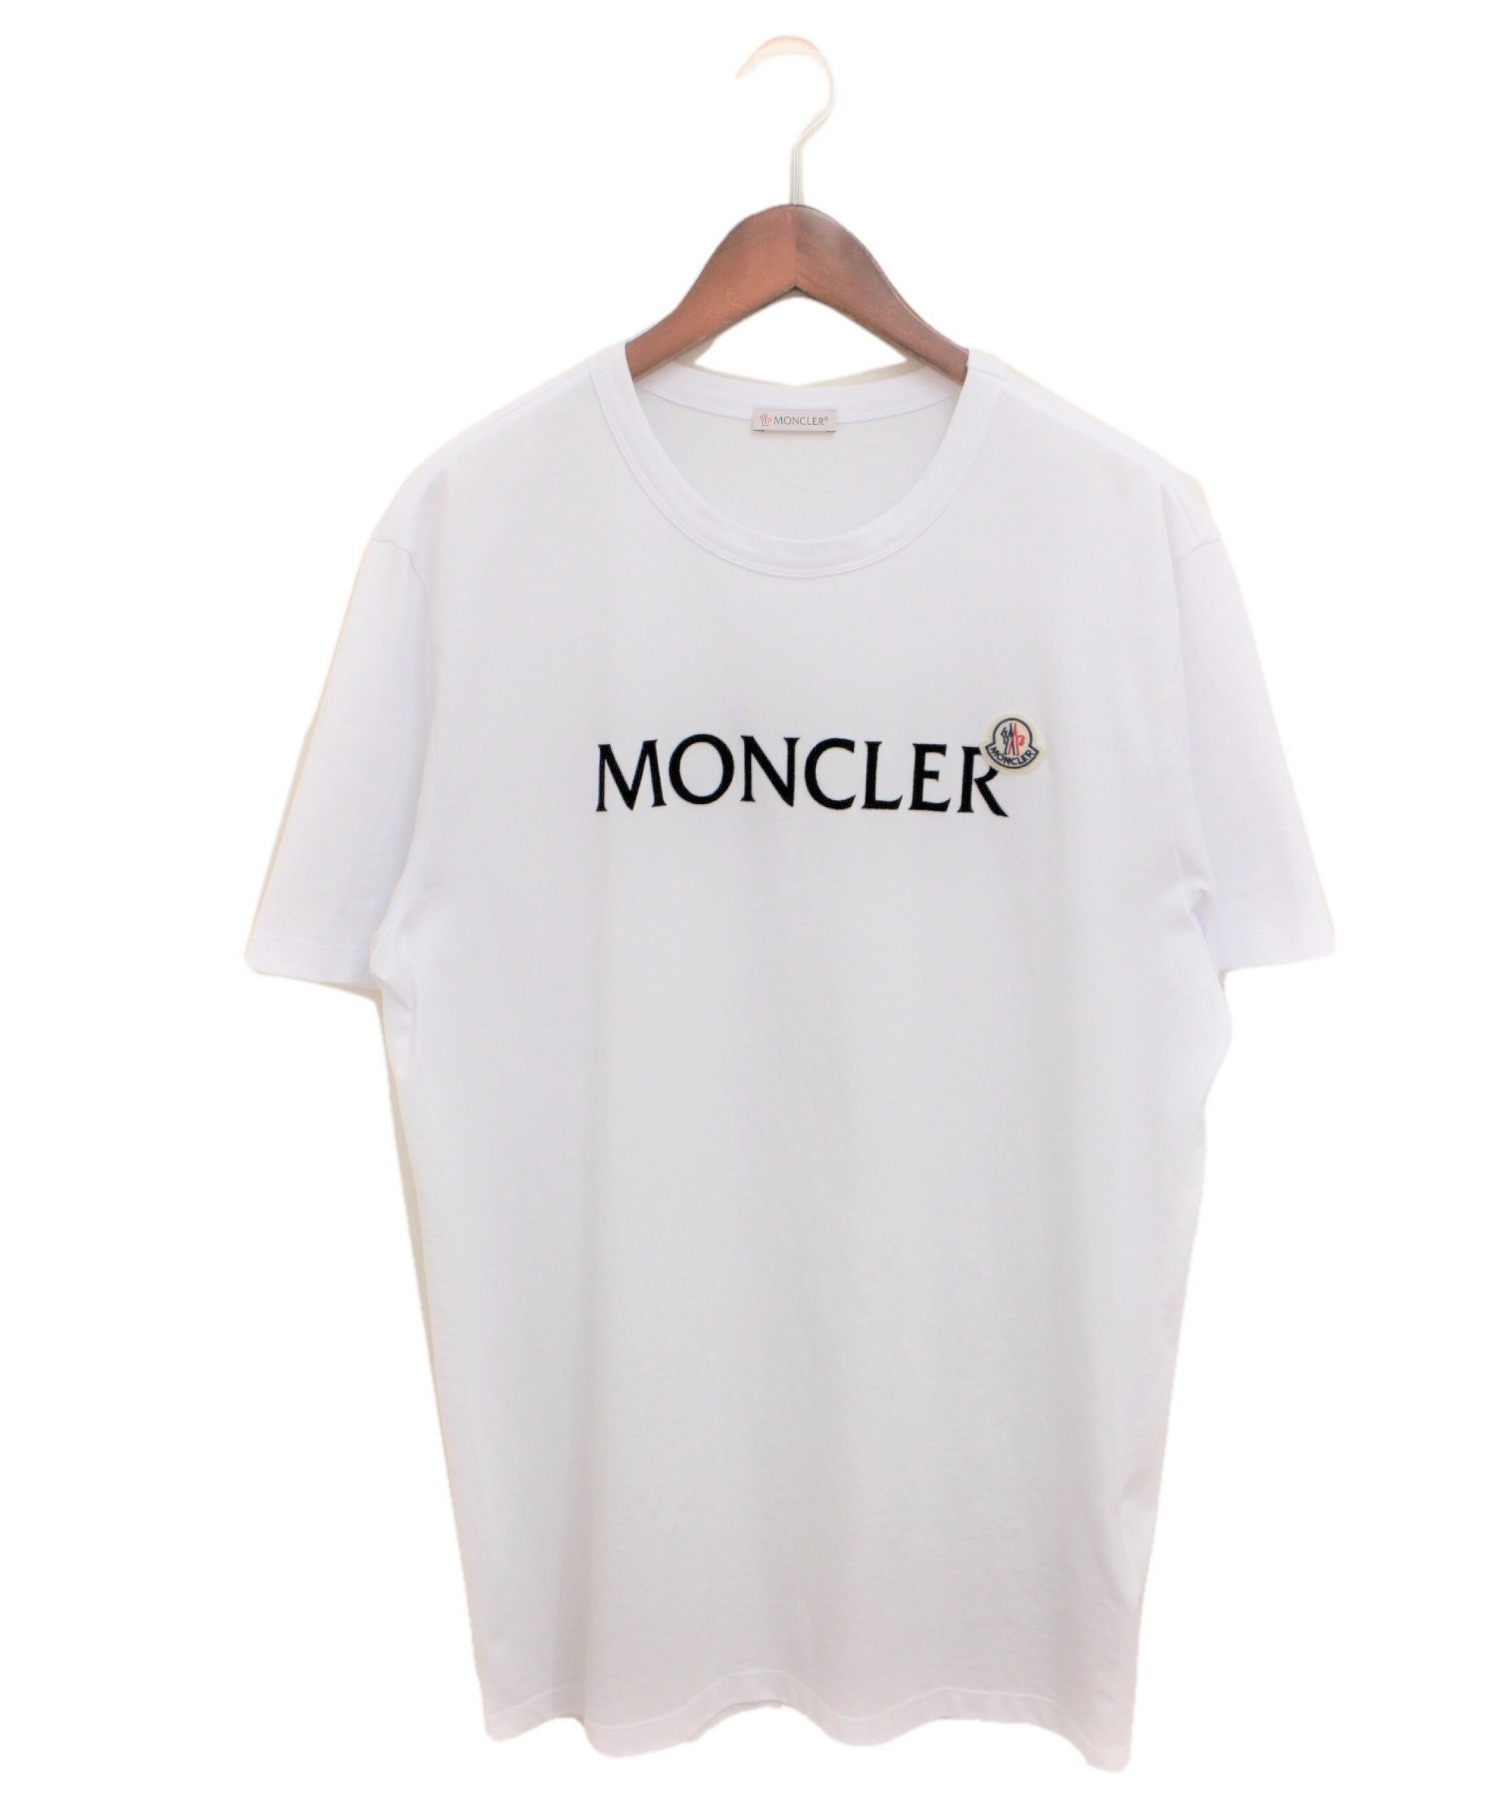 MONCLER - MONCLER モンクレール Tシャツ サイズ:M CRAIG GREEN ロゴ